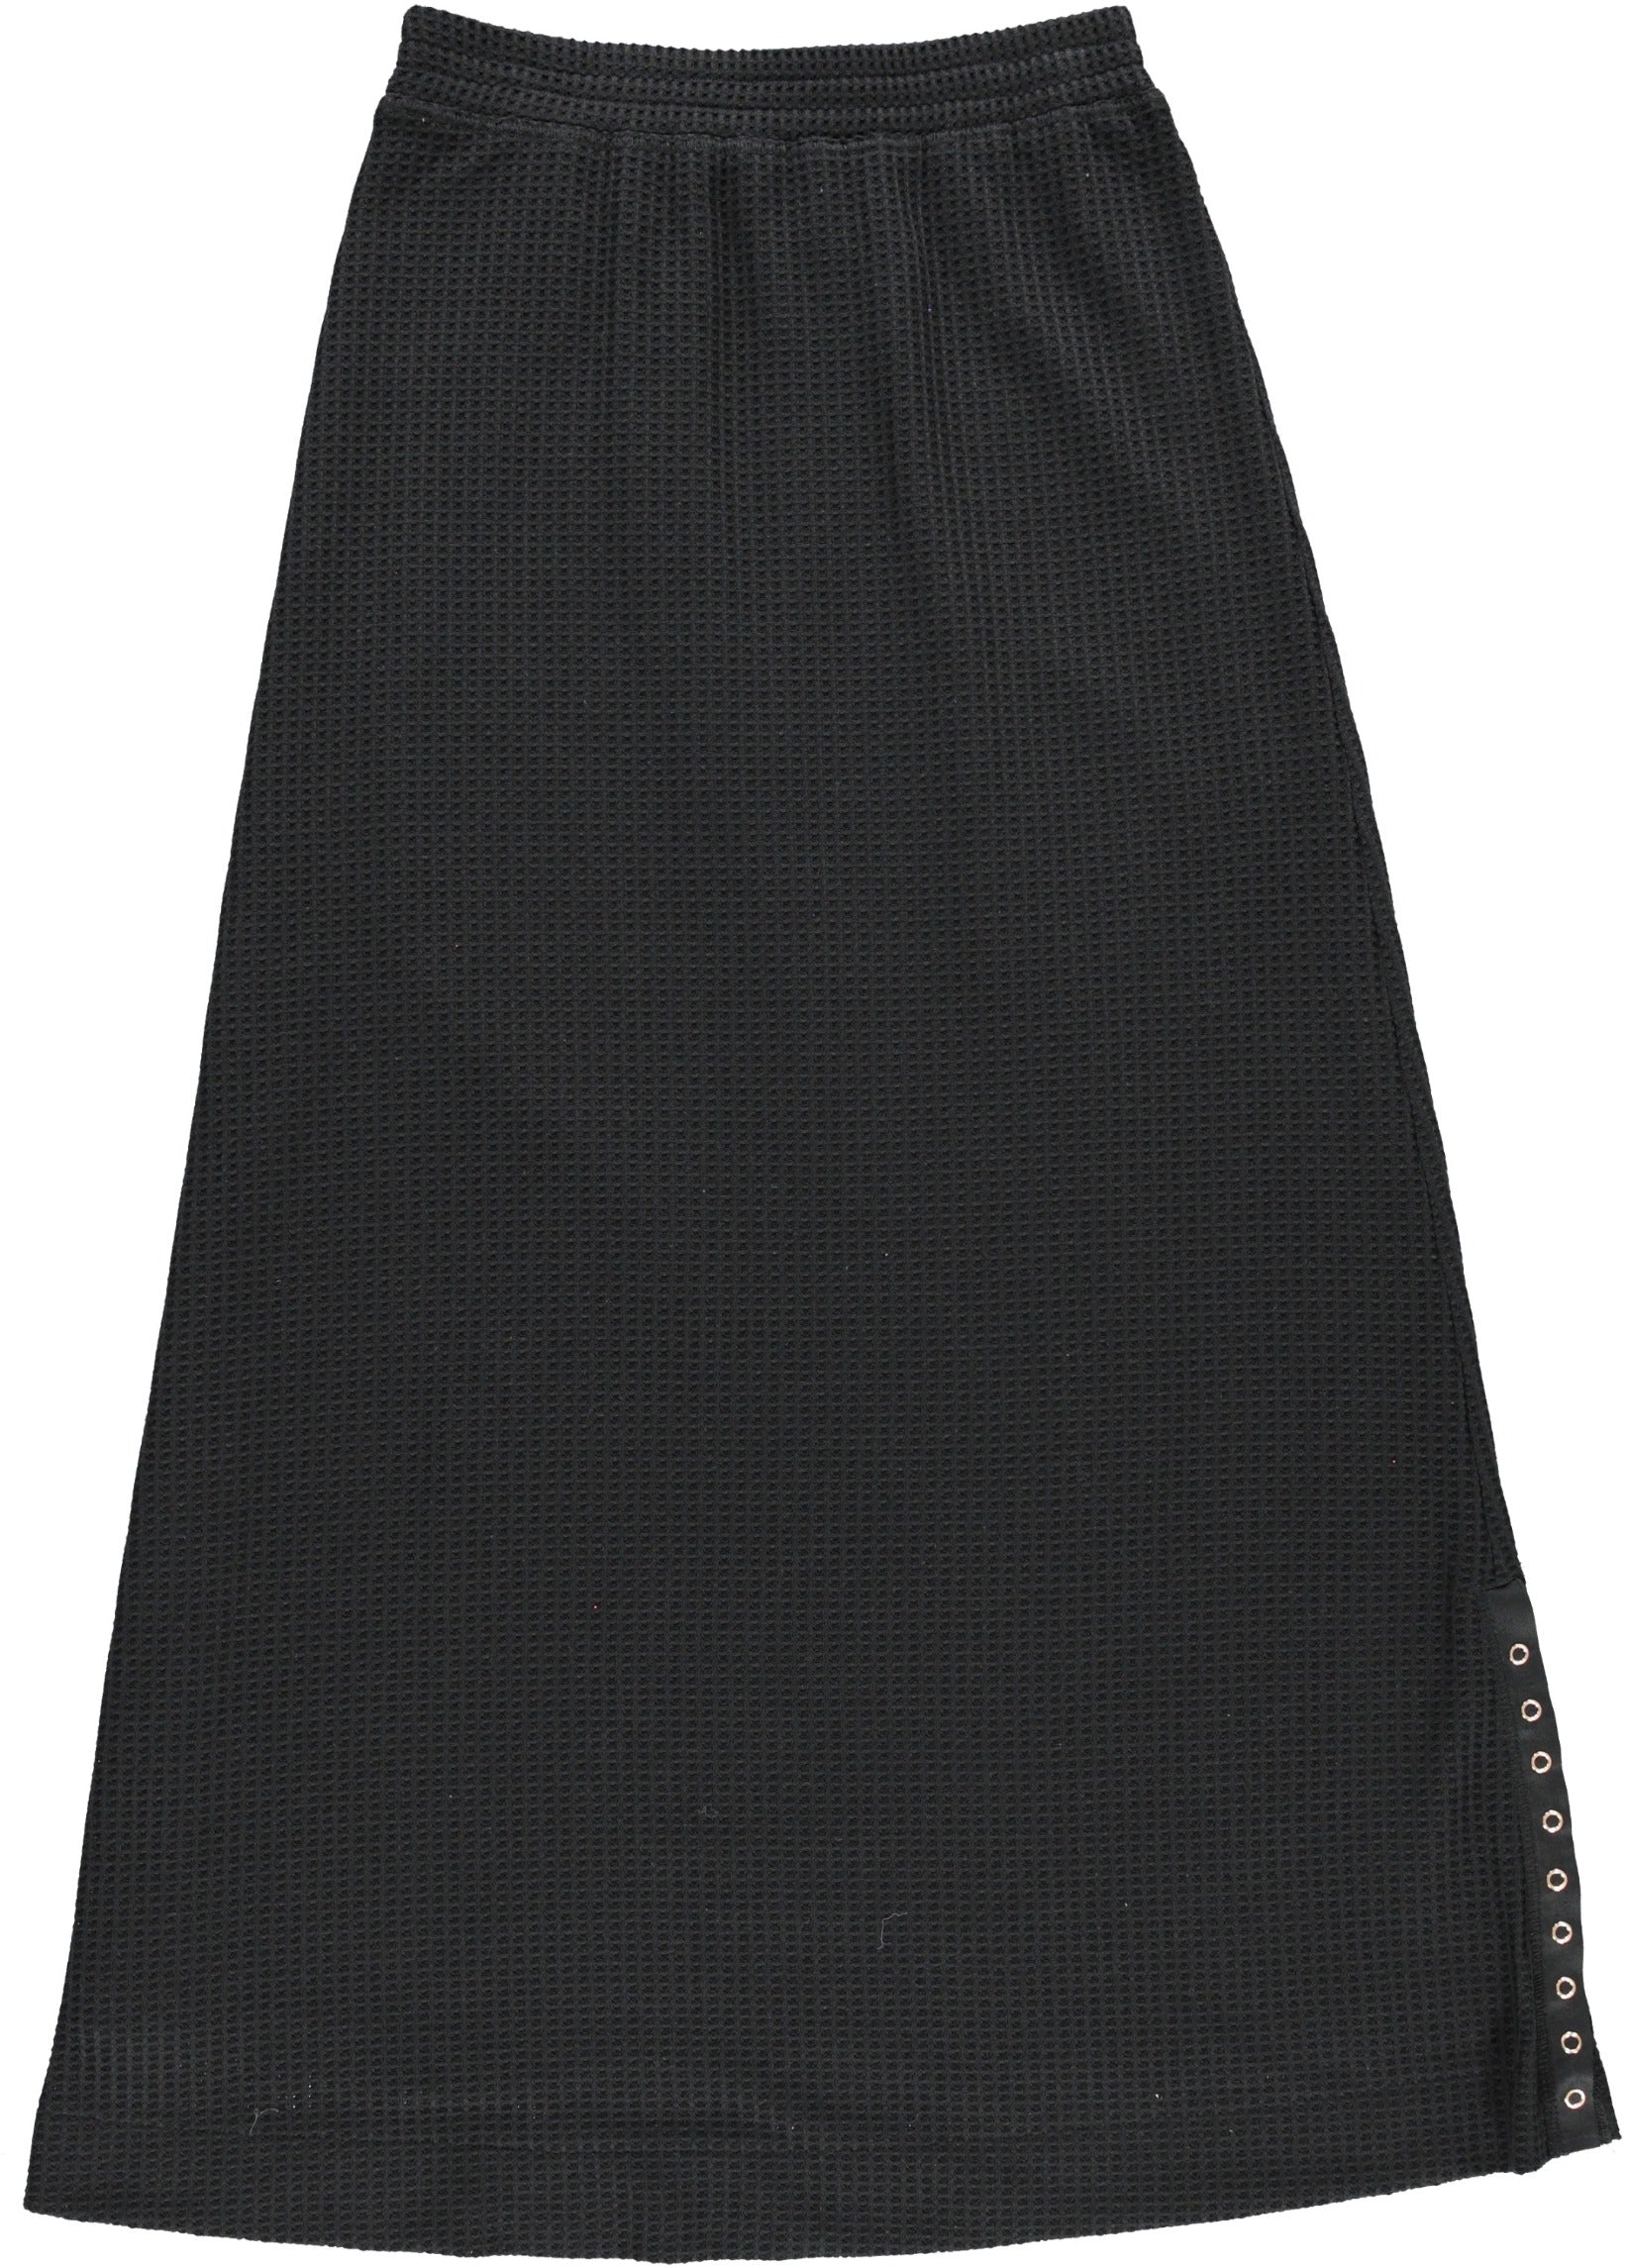 Black Waffle Knit Skirt